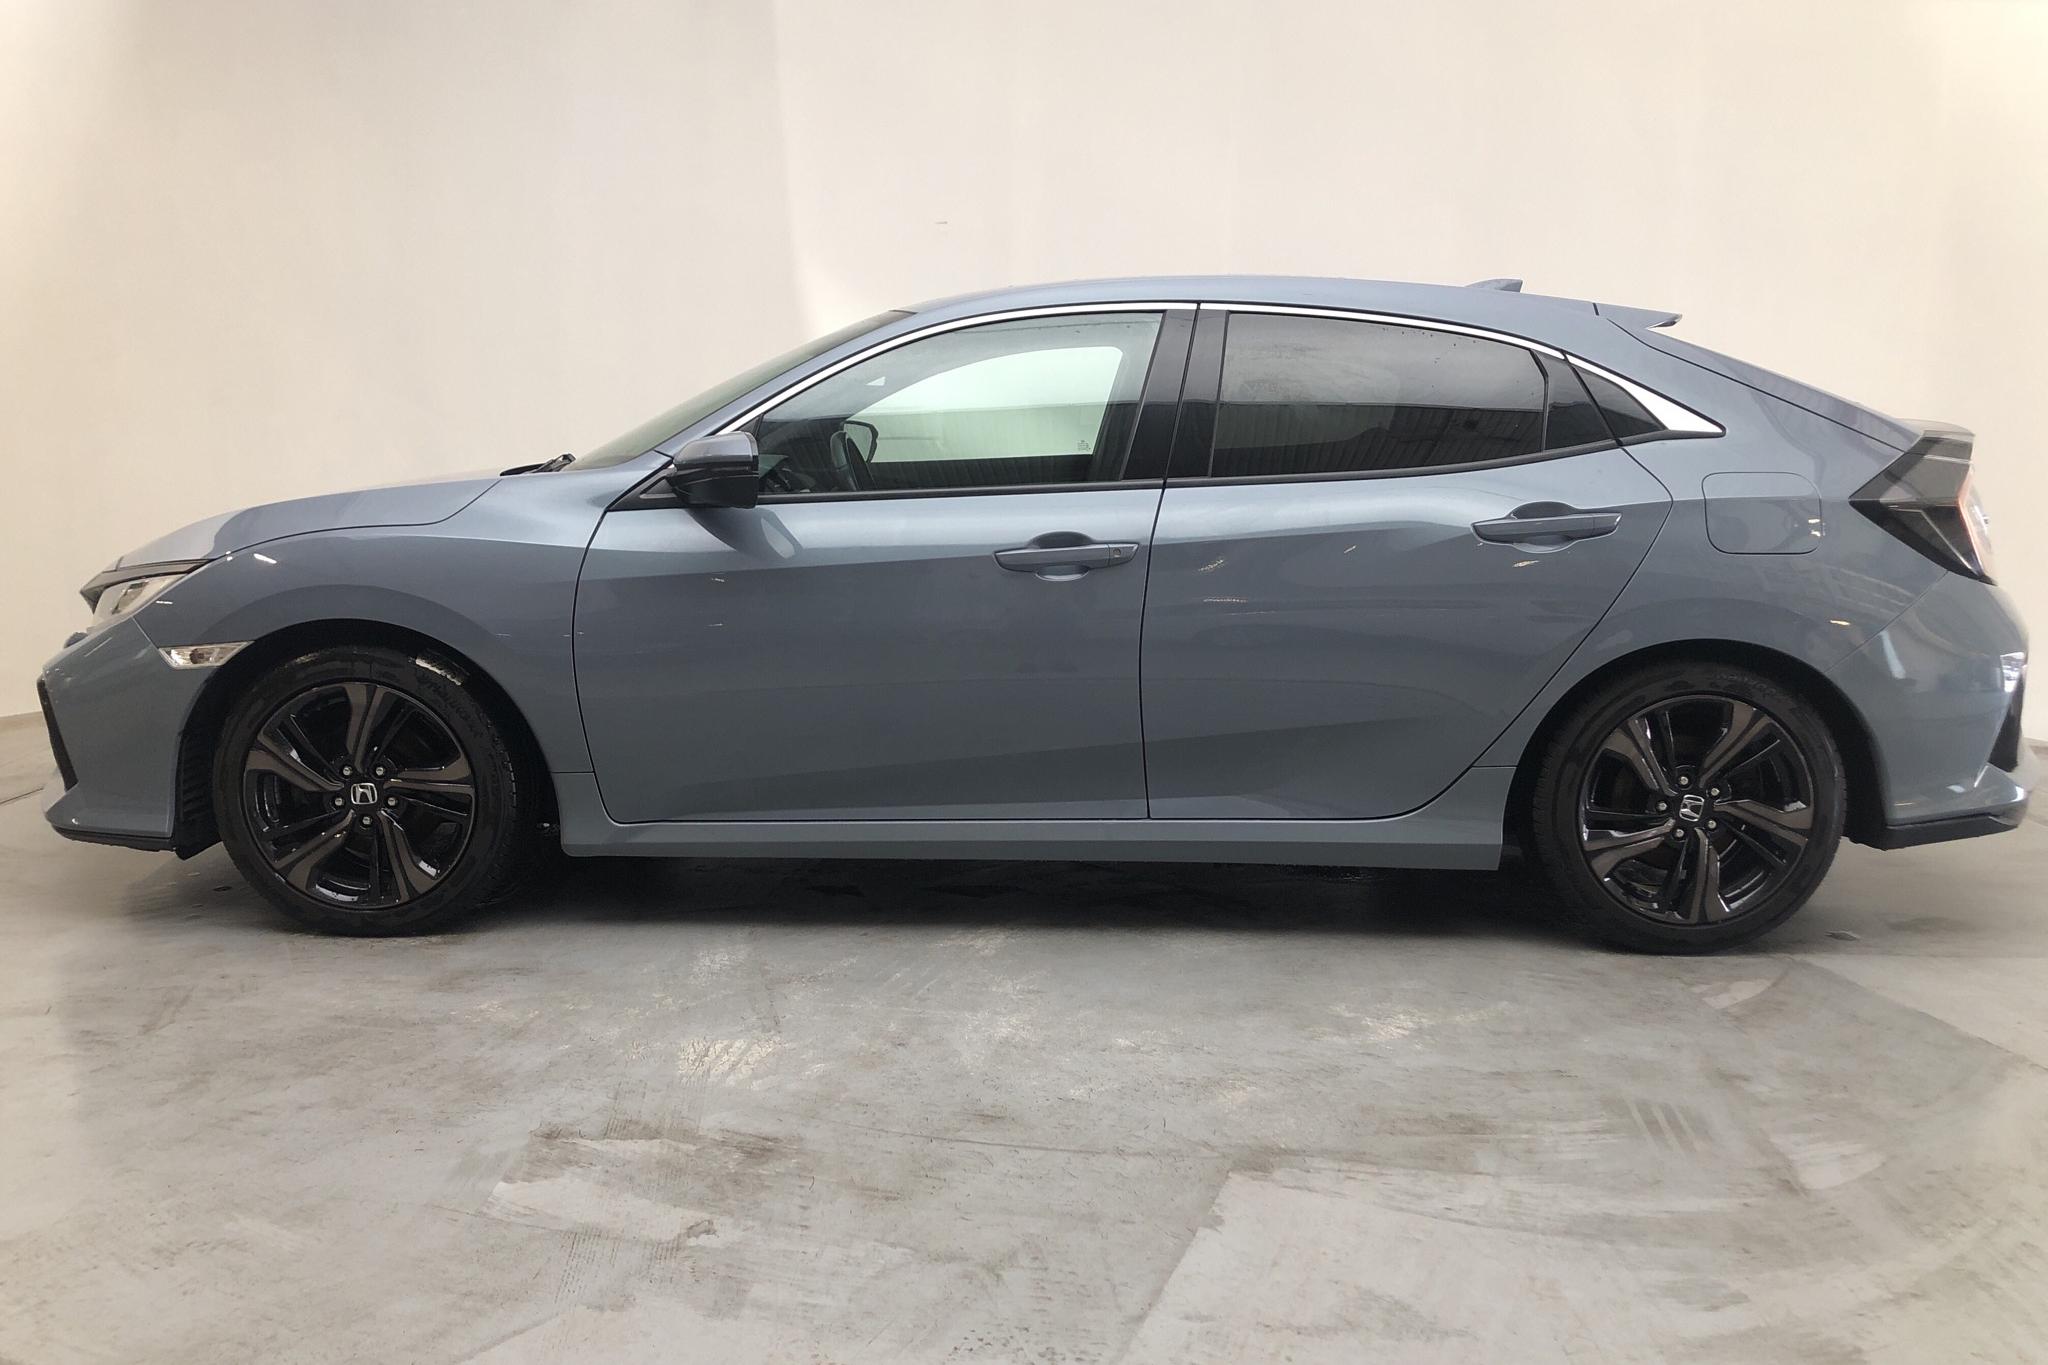 Honda Civic 1.6 i-DTEC 5dr (120hk) - 88 510 km - Manual - Dark Grey - 2018